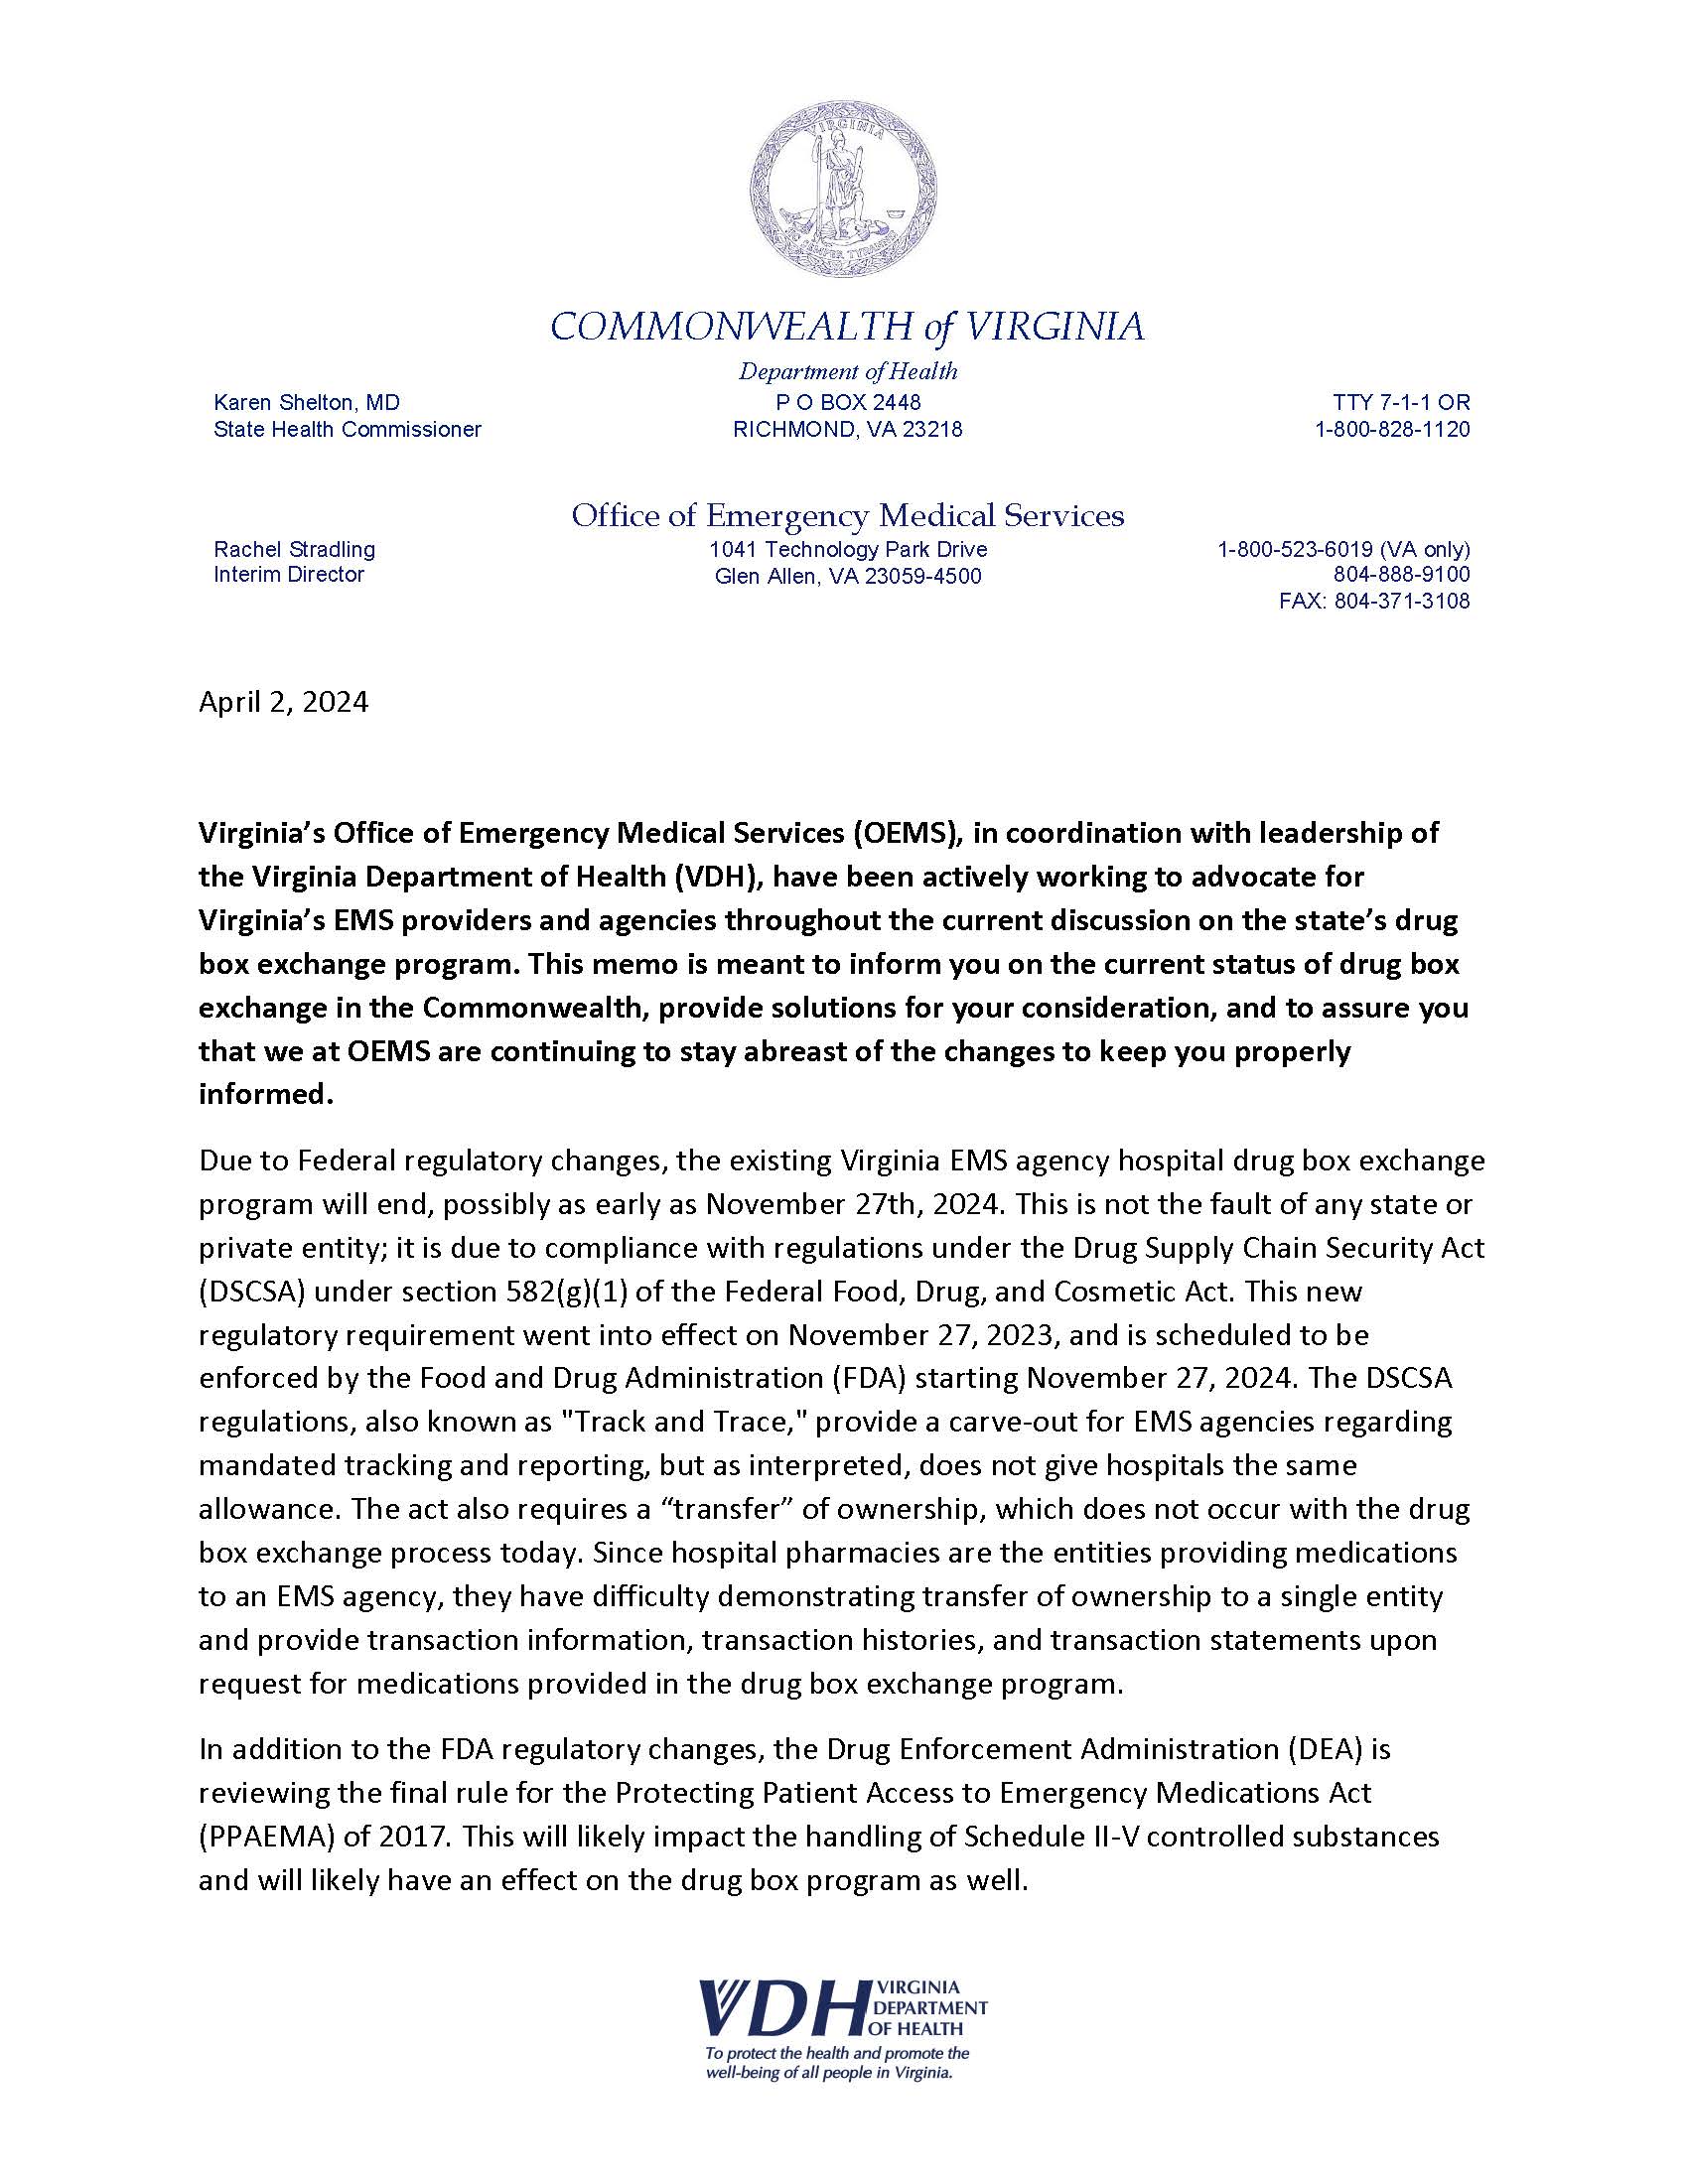 Memorandum - Changes to Virginia EMS Drug Box Exchange Program